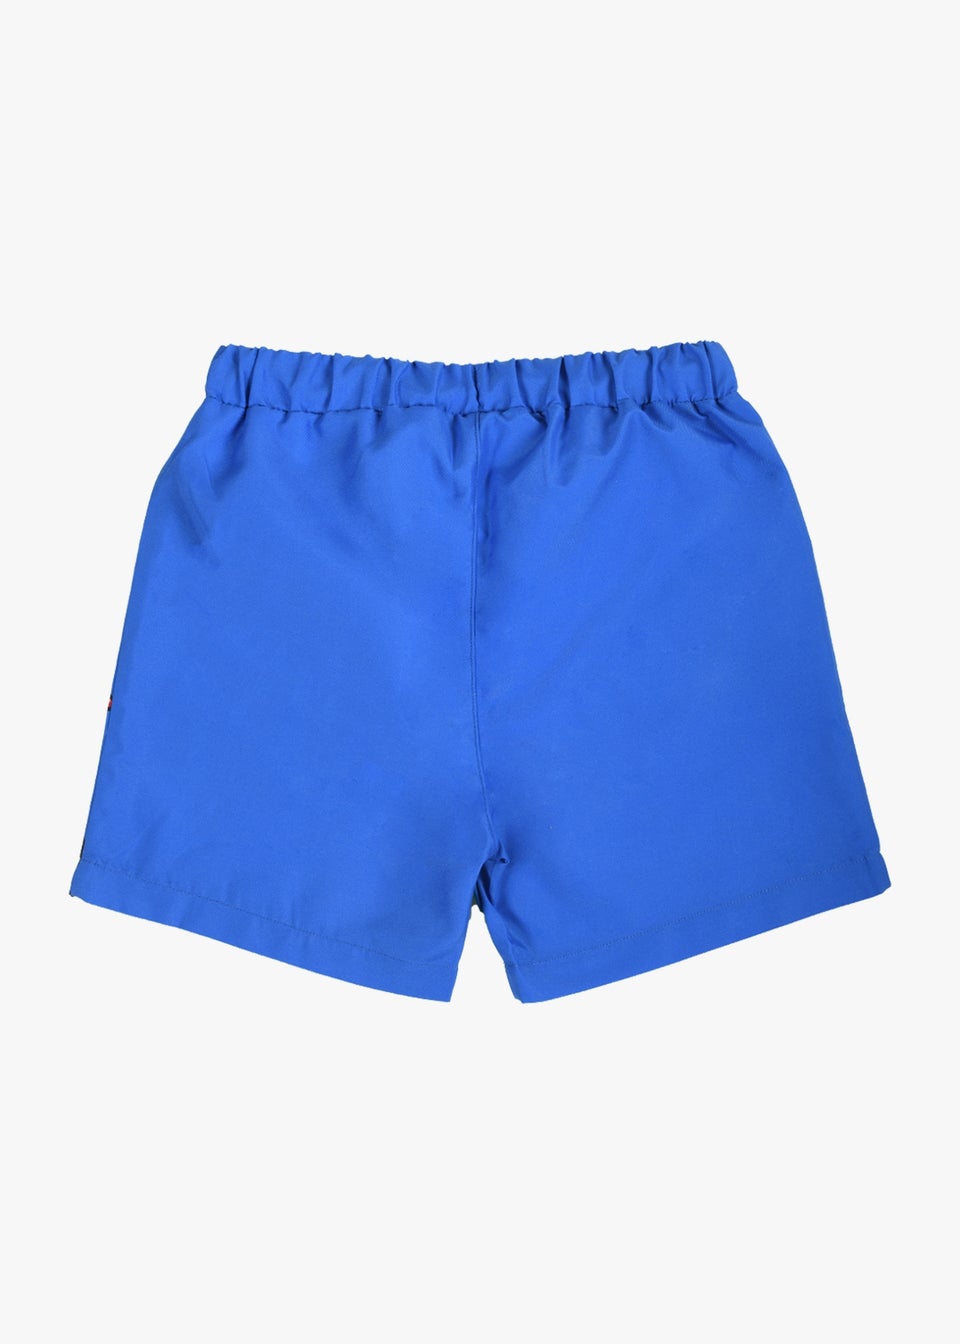 Boys Sonic Prime Swim Shorts